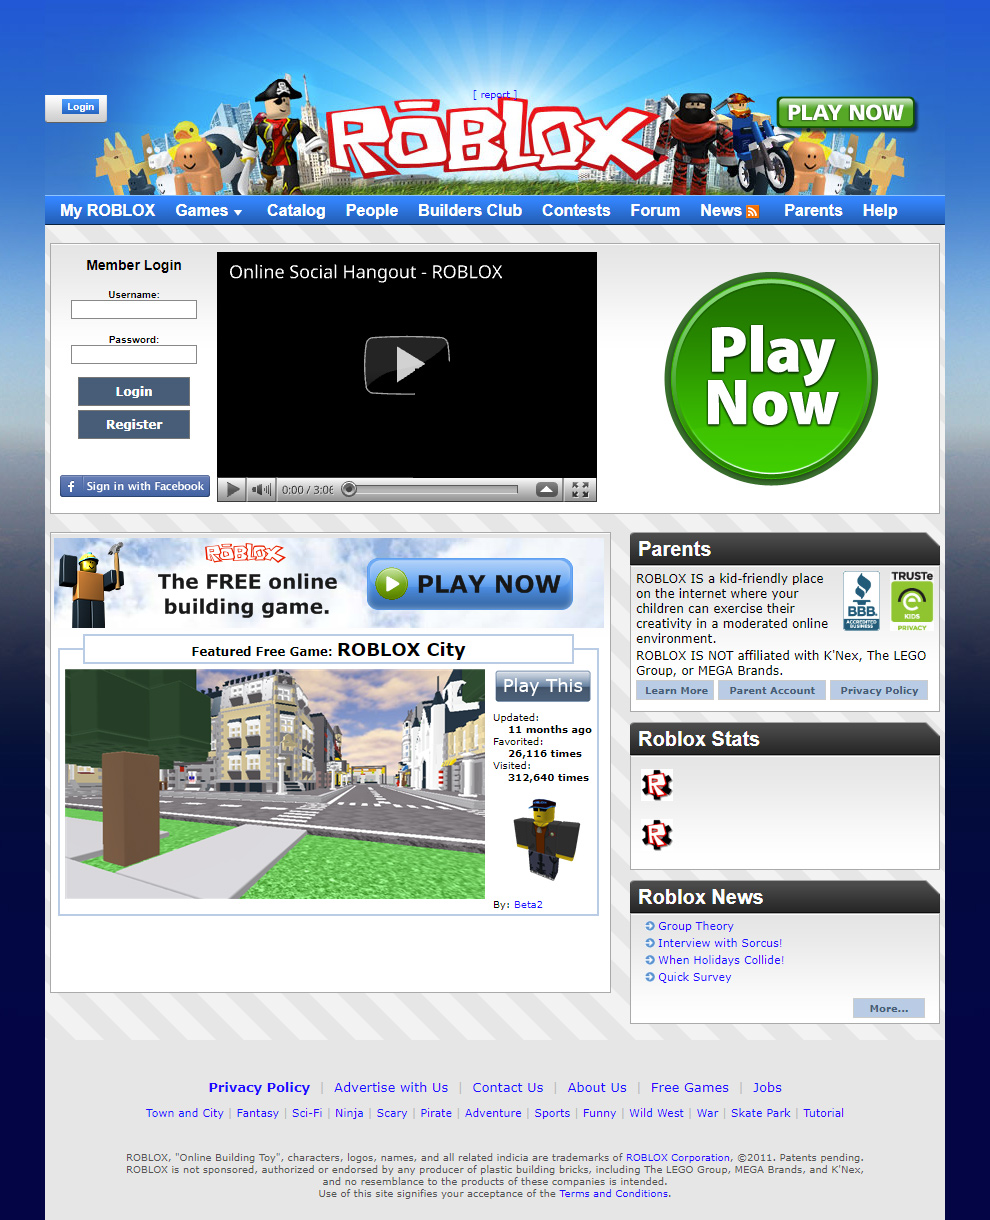 Roblox in 2006 - Web Design Museum